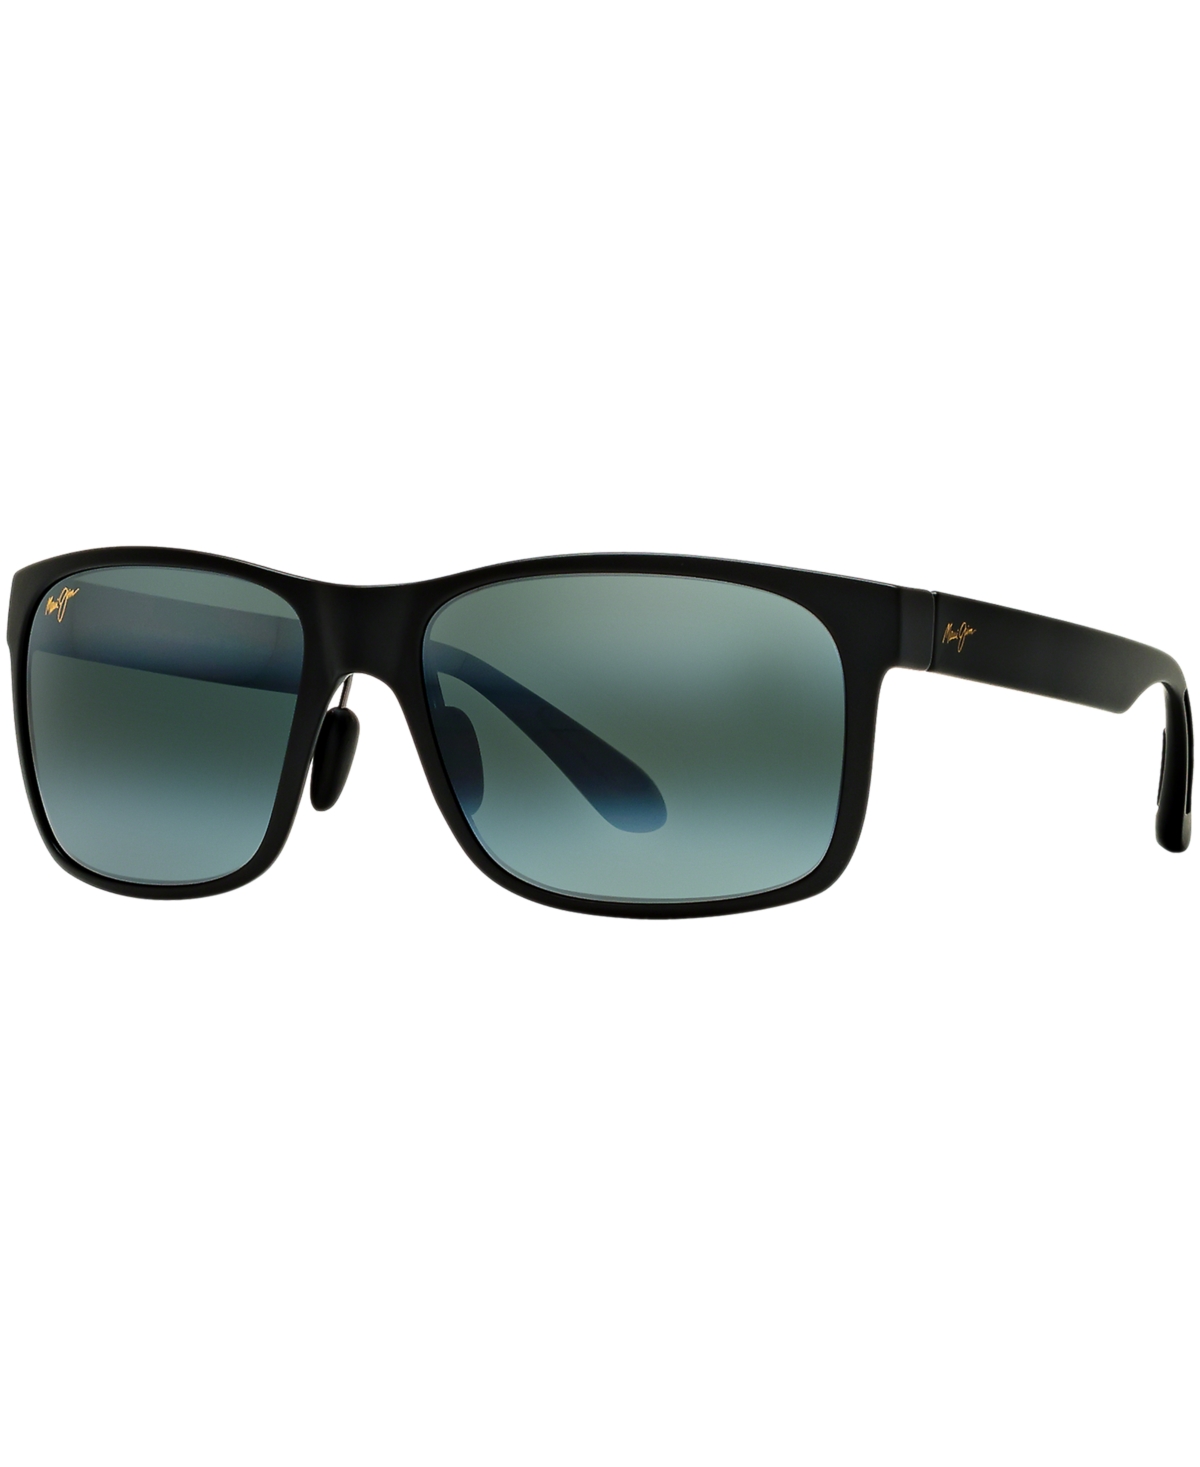 Red Sands Polarized Sunglasses , 423 - Black Matte/Grey Mirrored Polarized